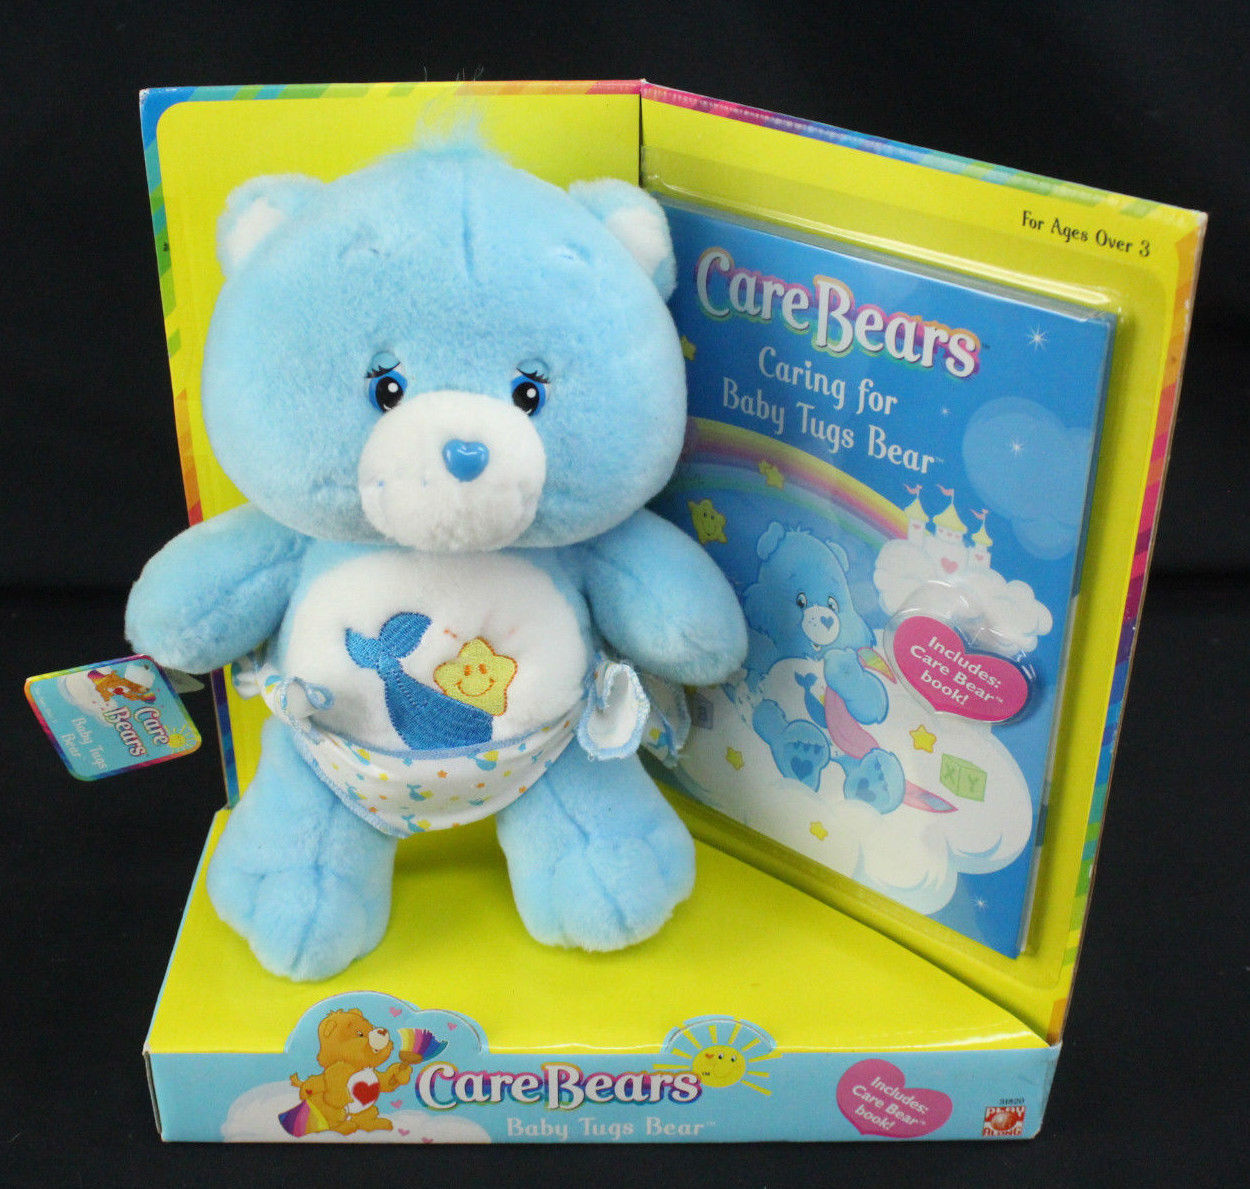 Care Bears Baby Tugs Bear - Brand New 10